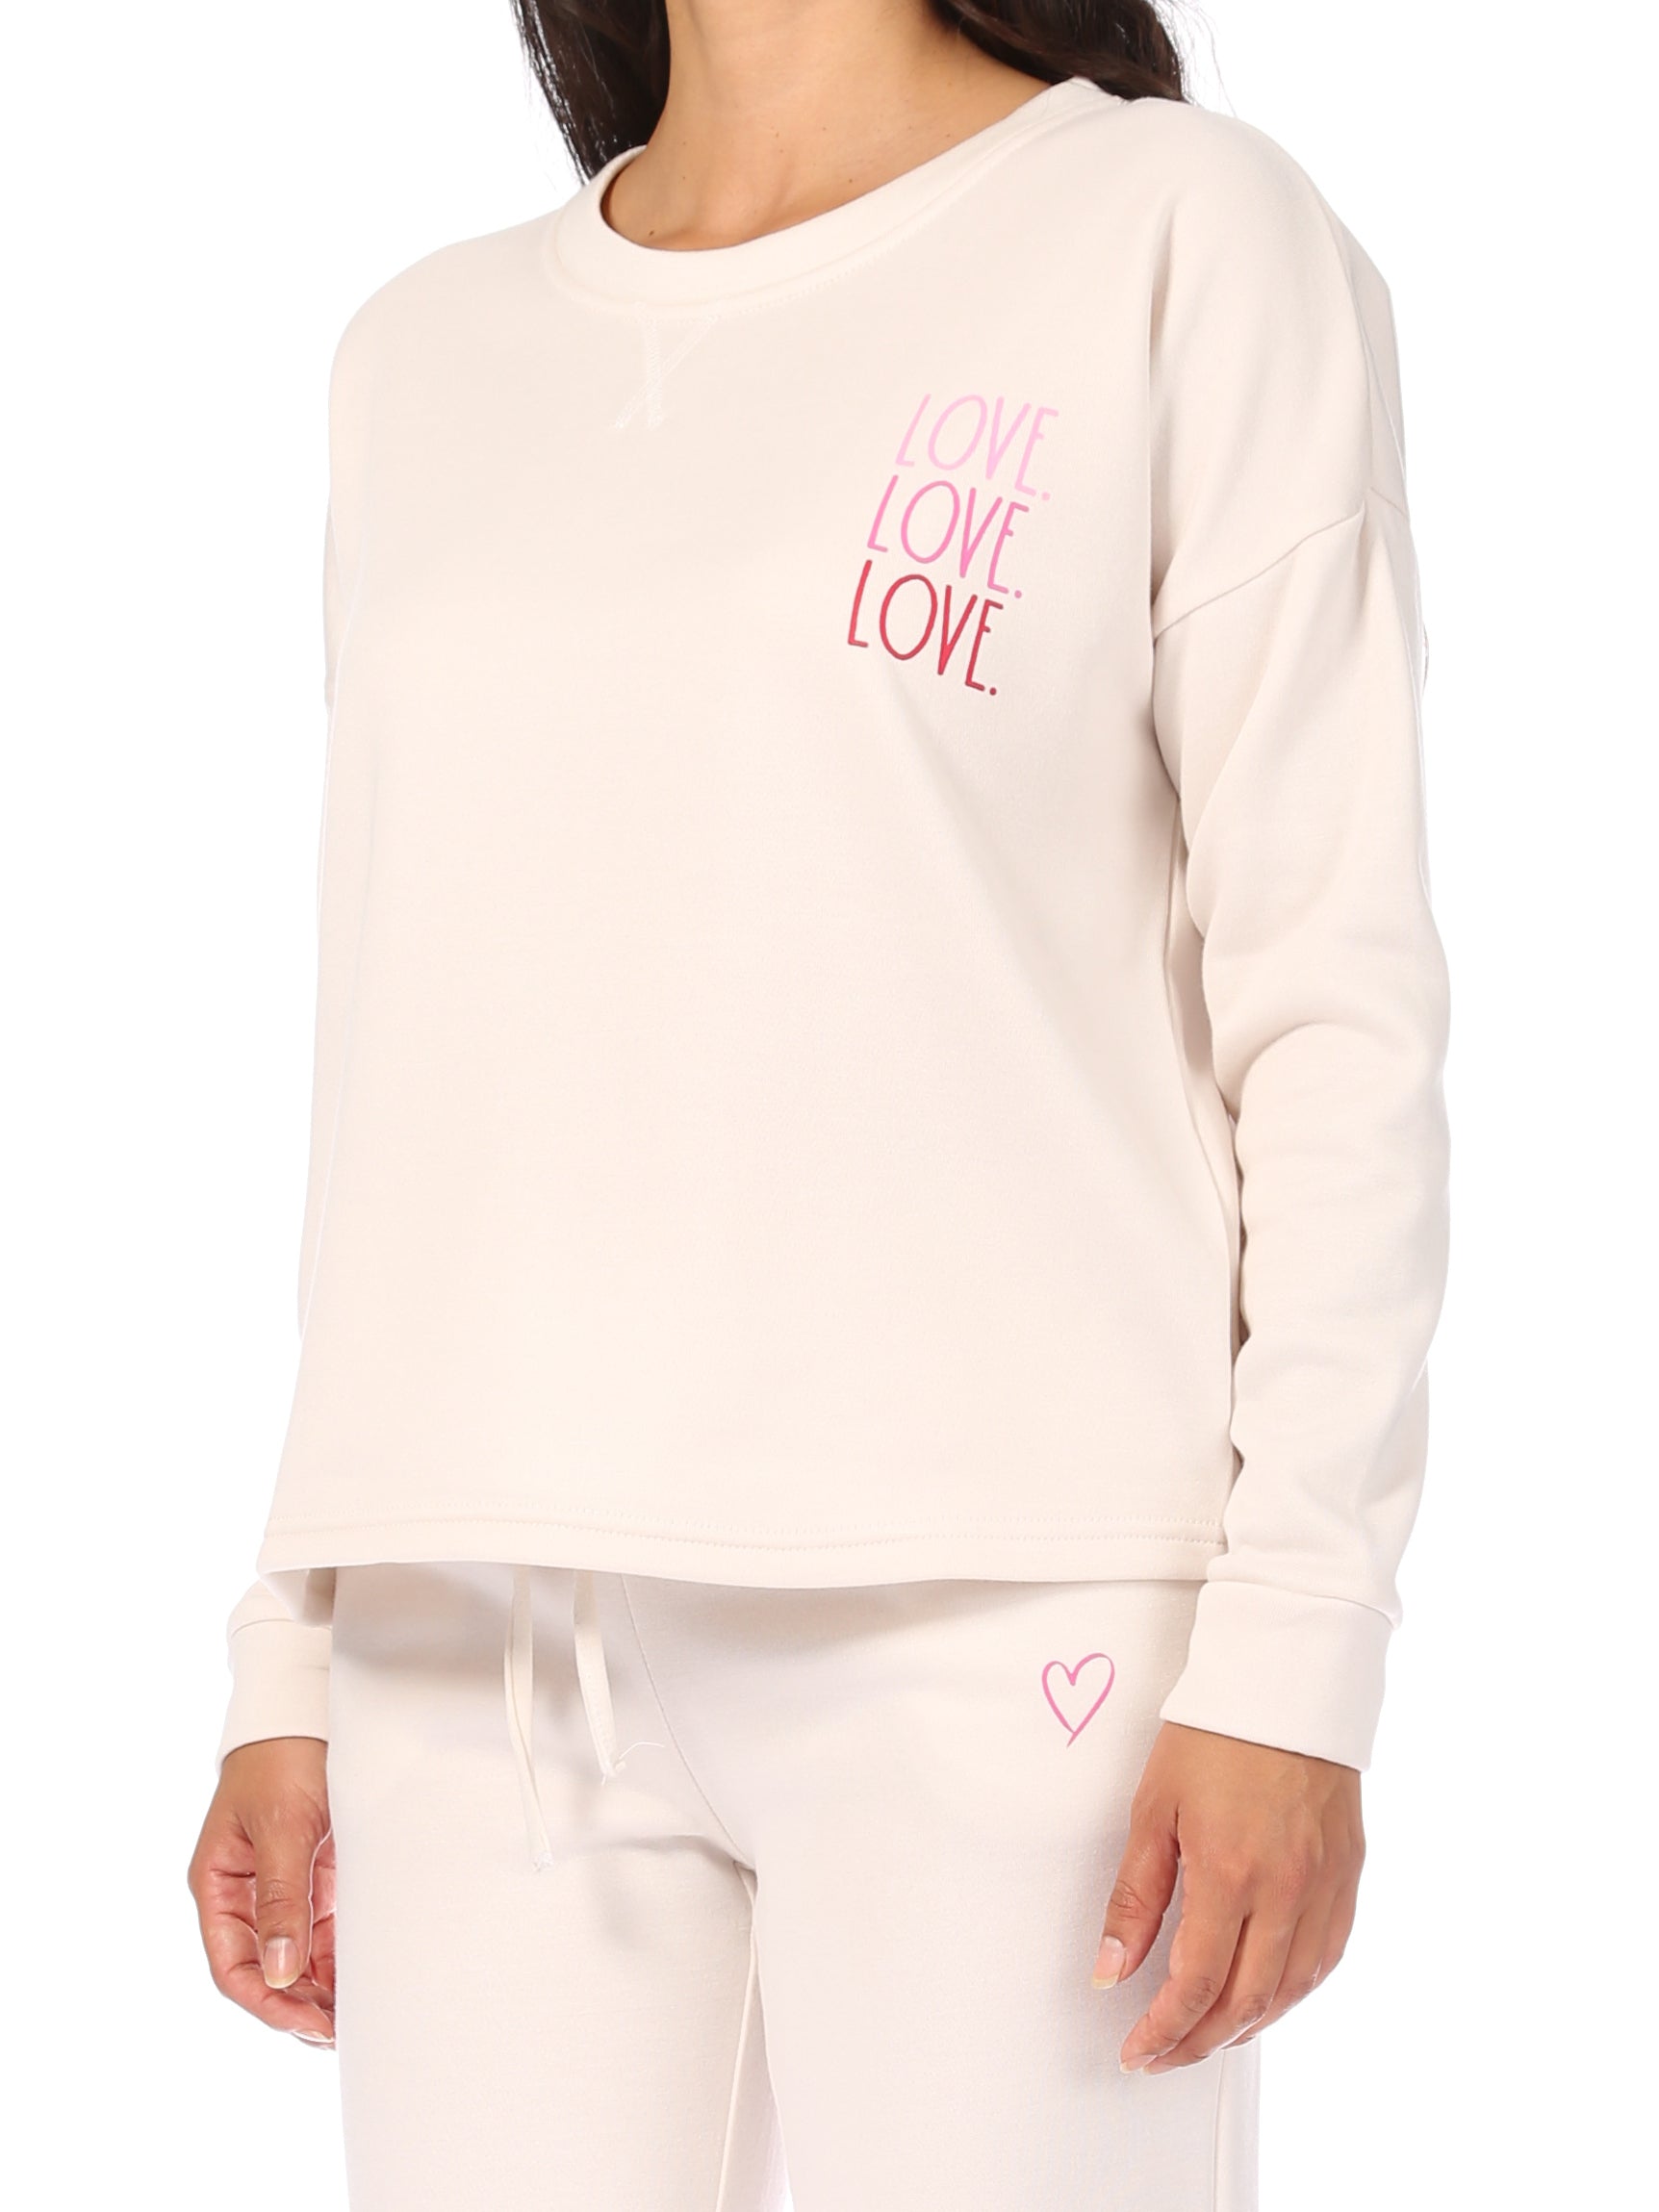 Rae Dunn Women's LOVE LOVE LOVE Long Sleeve Pullover Sweatshirt and  Drawstring Sweatpants Lounge Set – Rae Dunn Wear